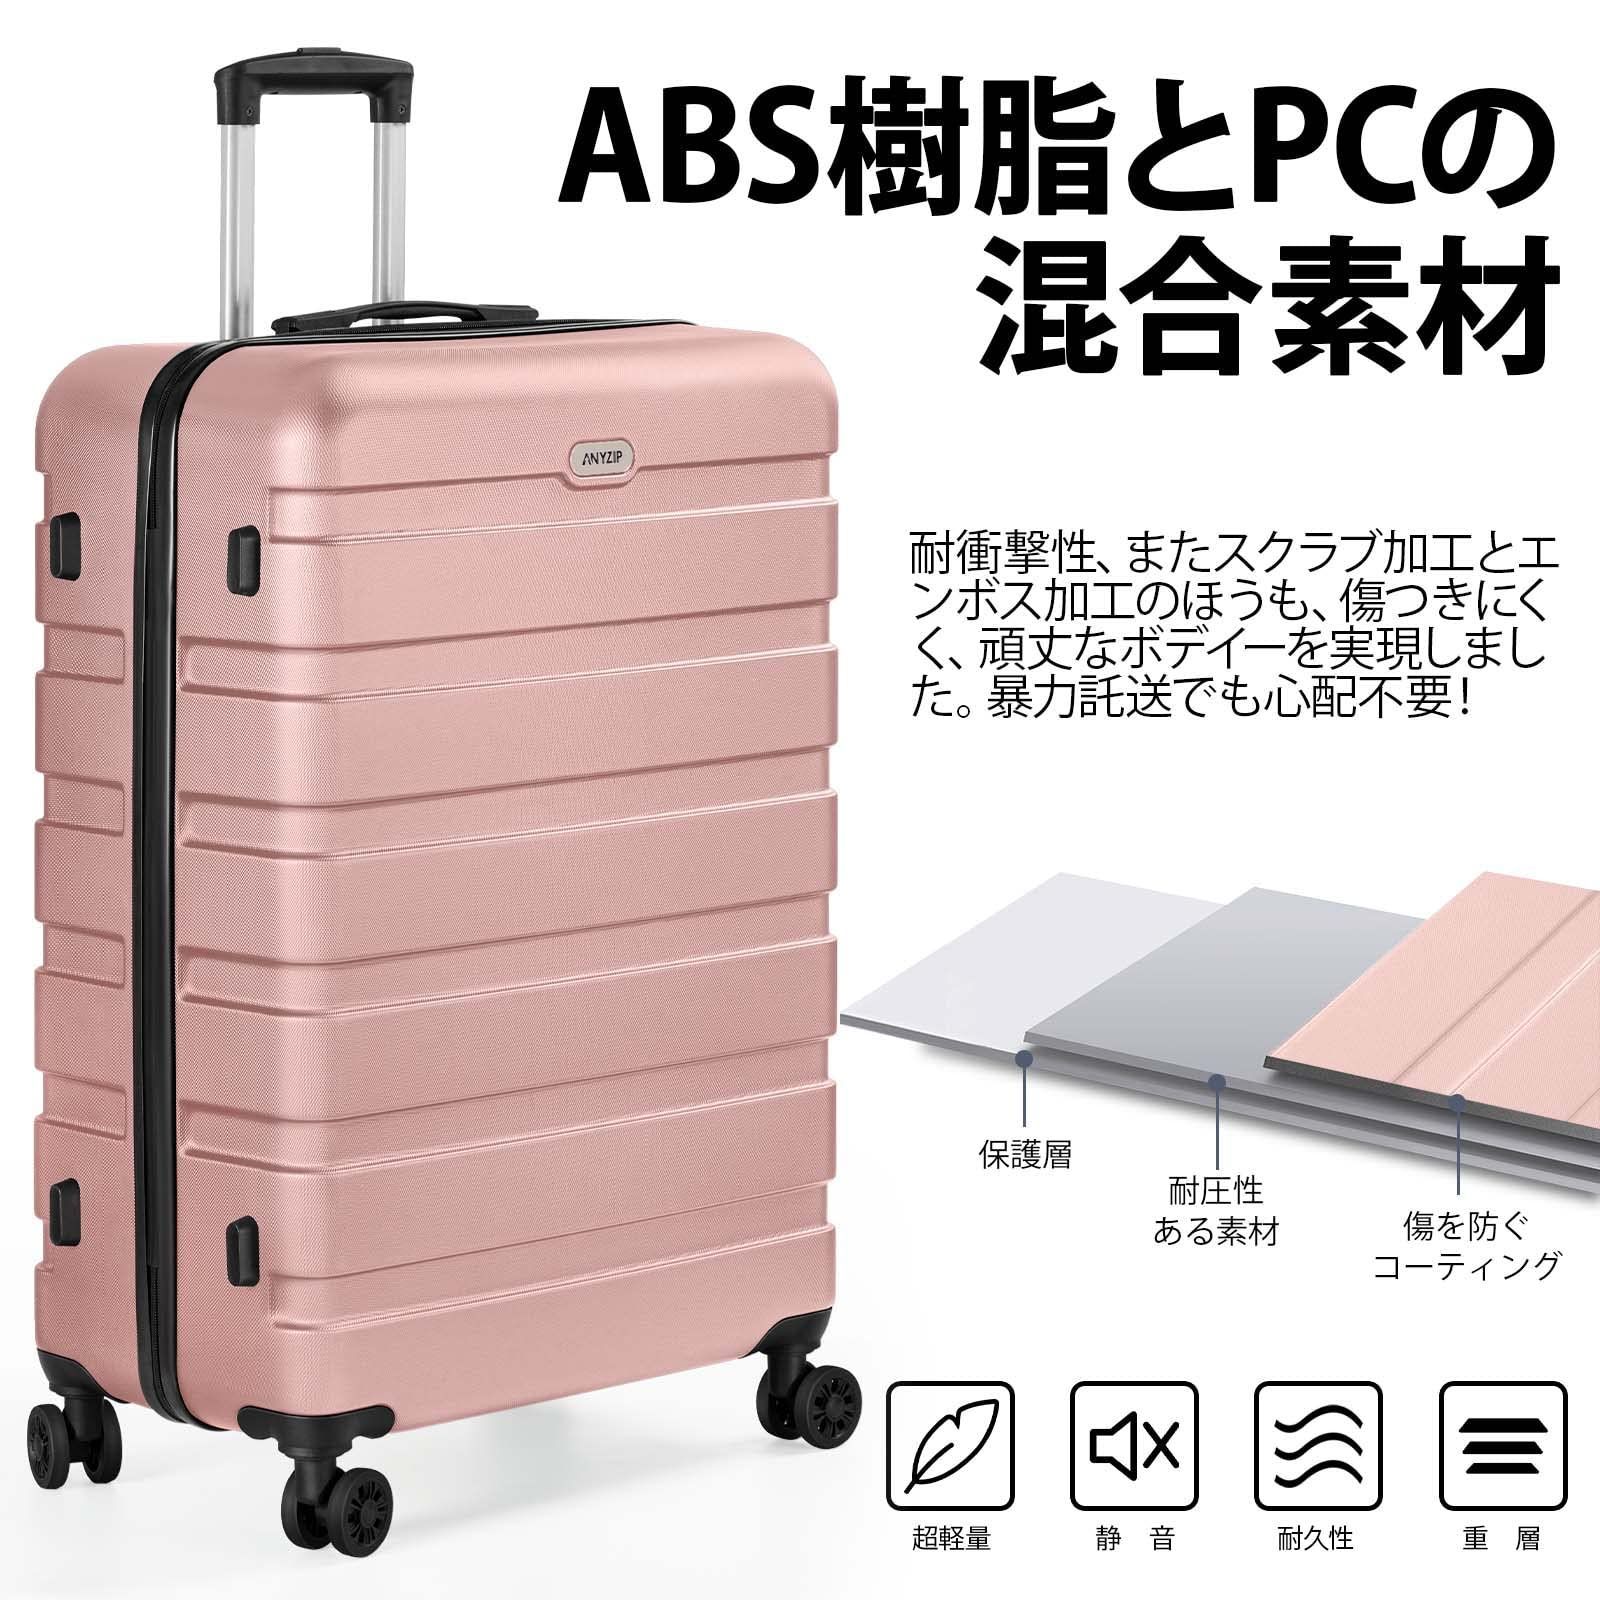 AnyZip 3点セット スーツケース キャリーケース キャリーバッグ 超軽量 大型 静音 ダブルキャスター 耐衝撃 360度回転 TSAロック搭載  ファスナー式 かわいい おしゃれ 家庭用 旅行 ビジネス 出張 AZ201-3set-Pink メルカリShops